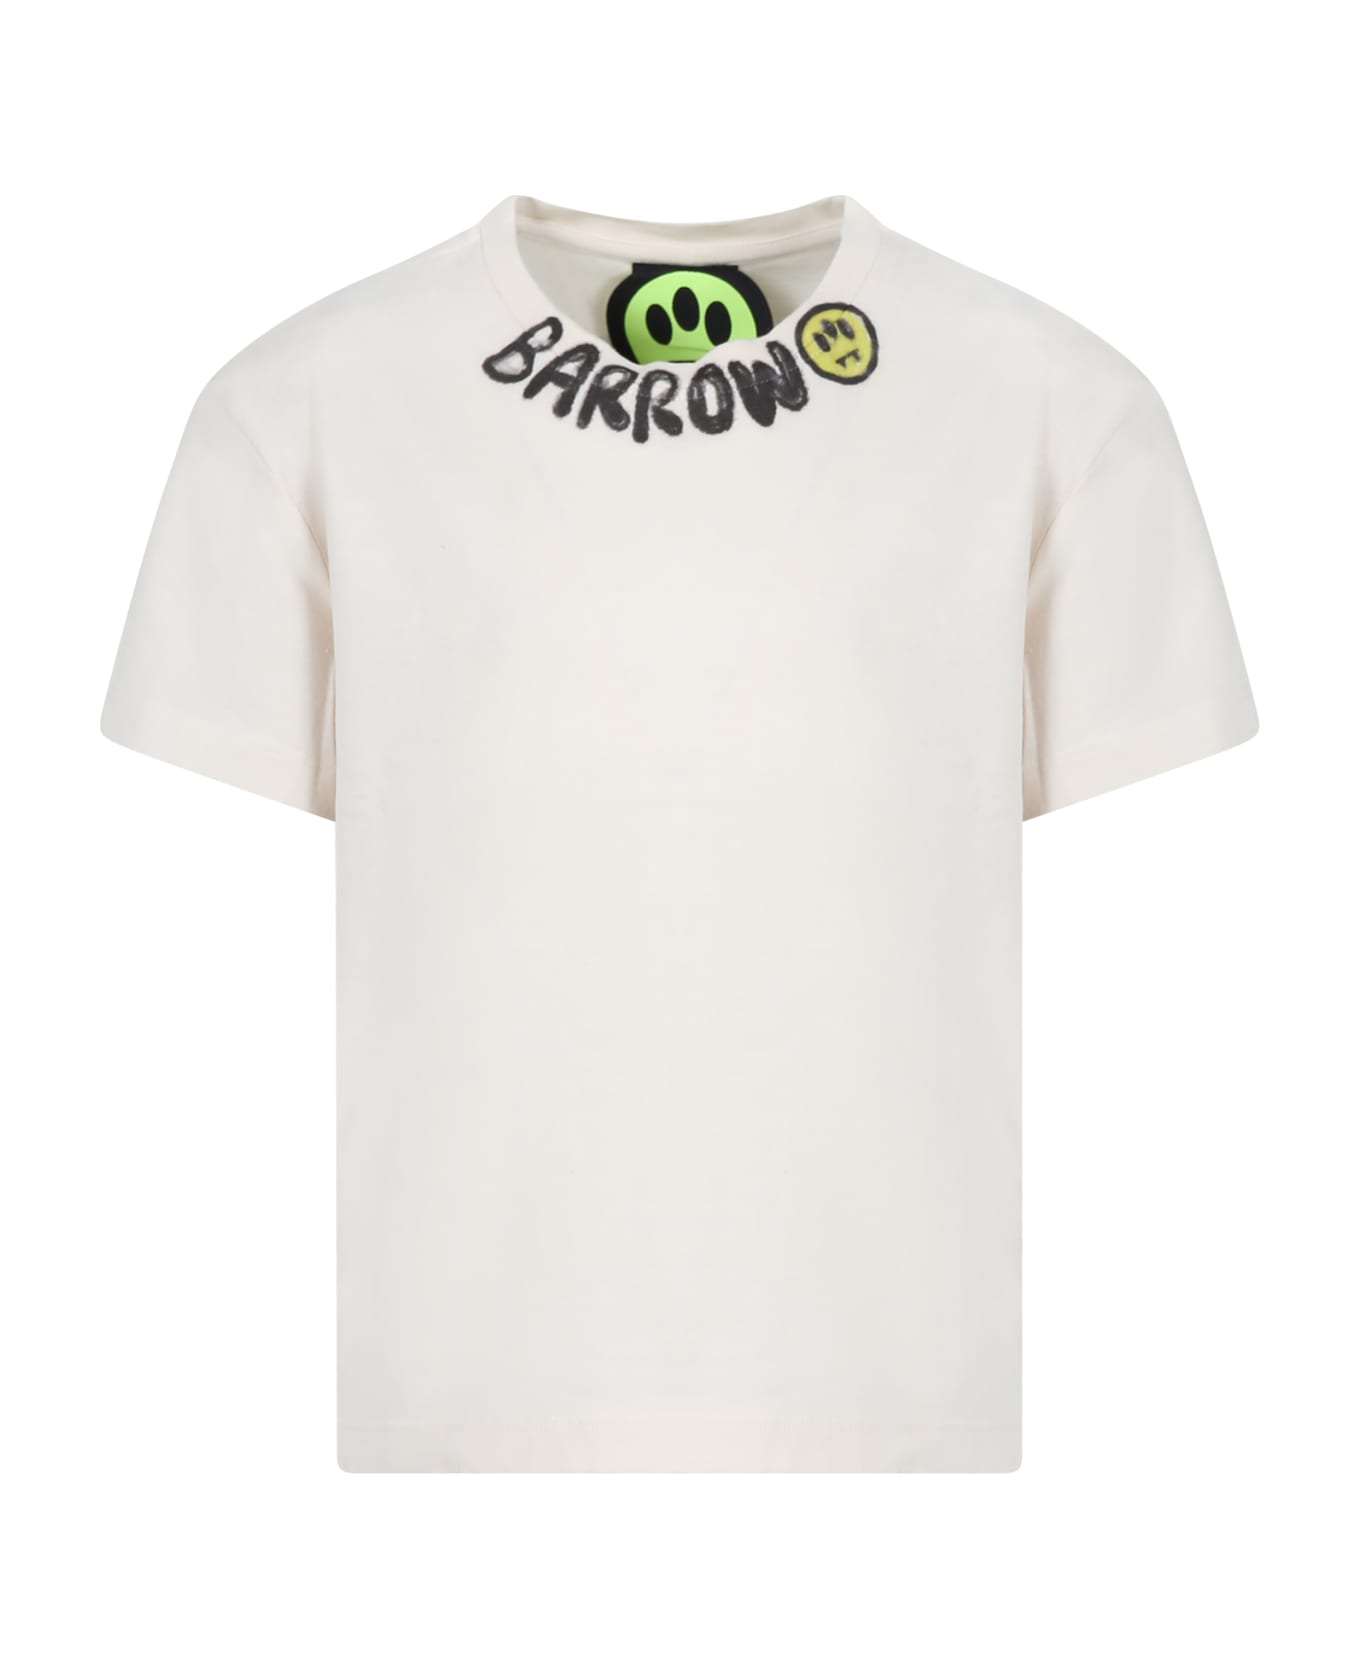 Barrow Ivory T-shirt For Kids With Logo - Crema